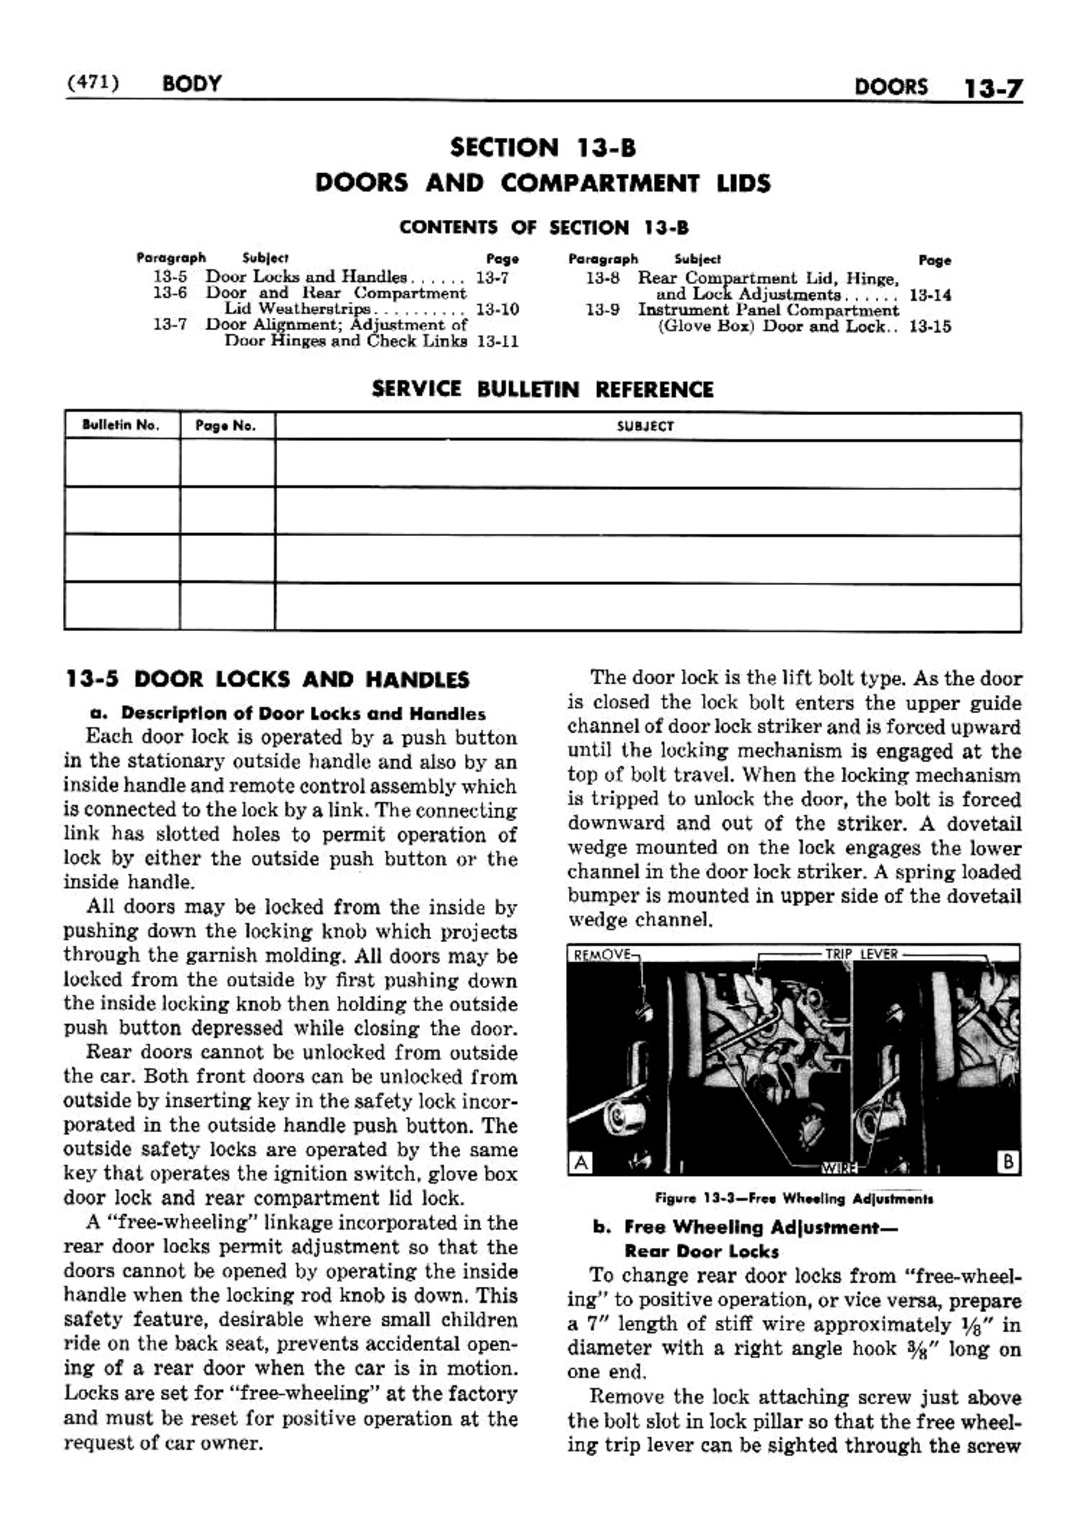 n_14 1952 Buick Shop Manual - Body-007-007.jpg